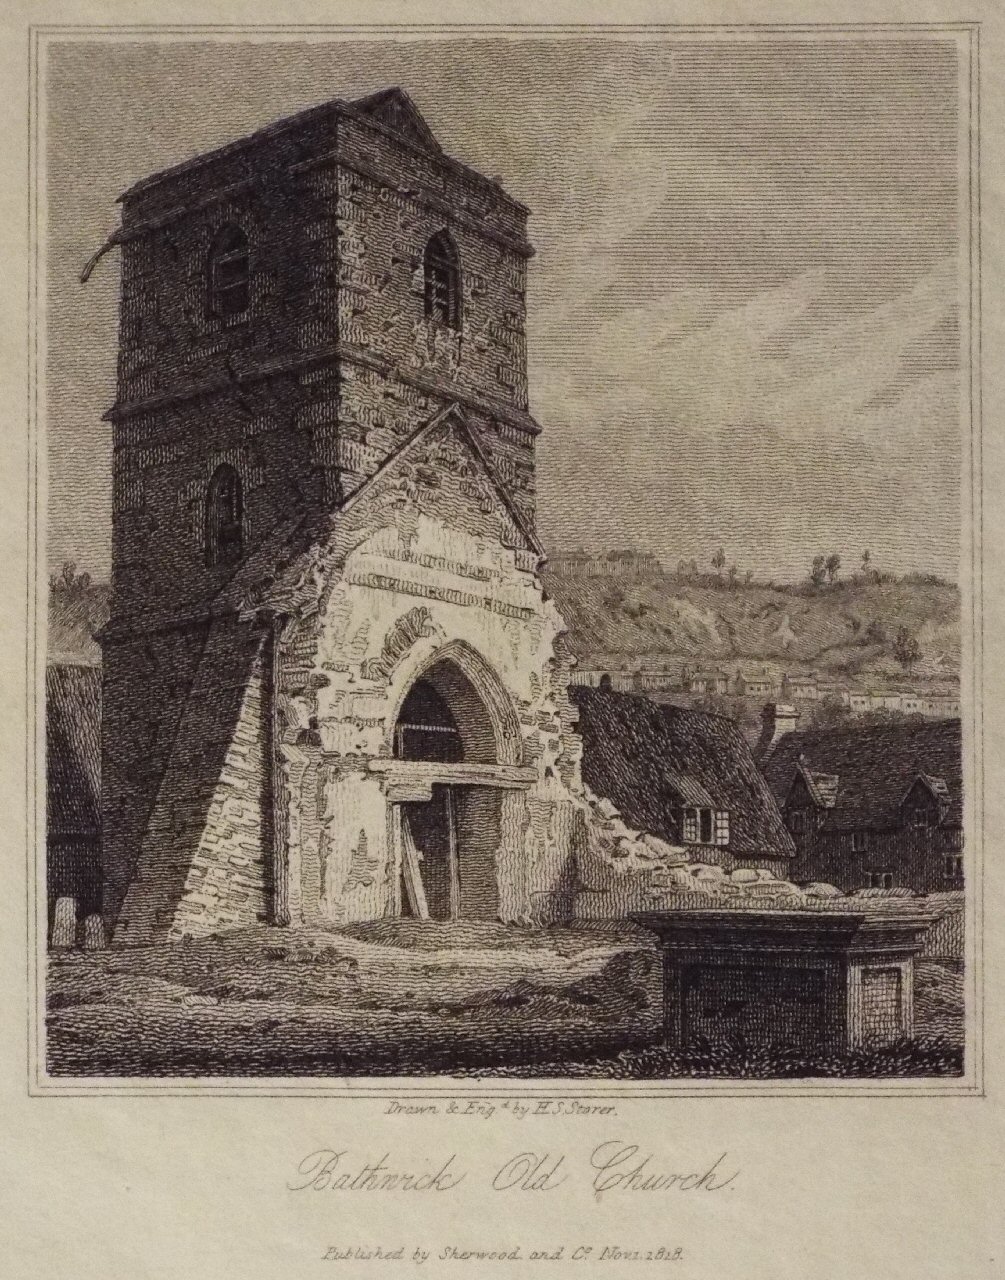 Print - Bathwick Old Church. - Storer